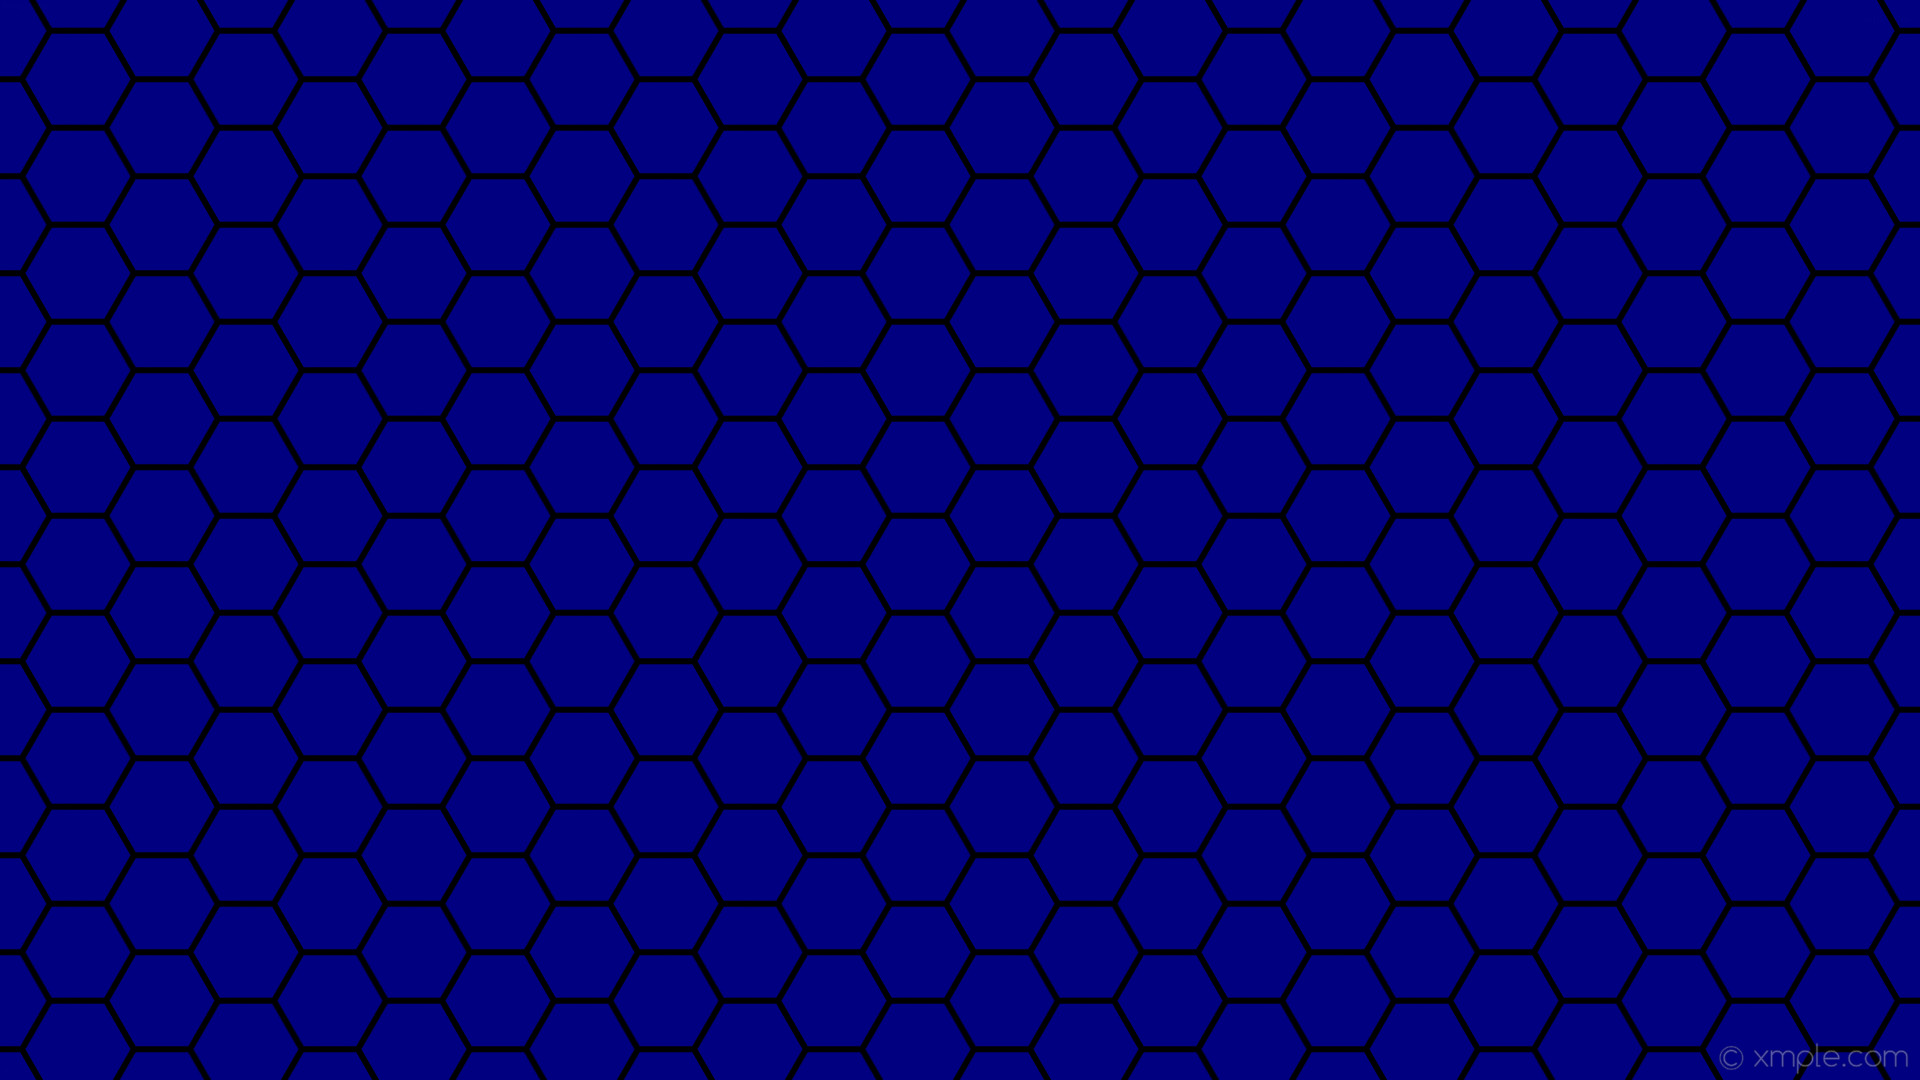 1920x1080 wallpaper beehive honeycomb blue hexagon black navy #000080 #000000  diagonal 30Â° 6px 97px